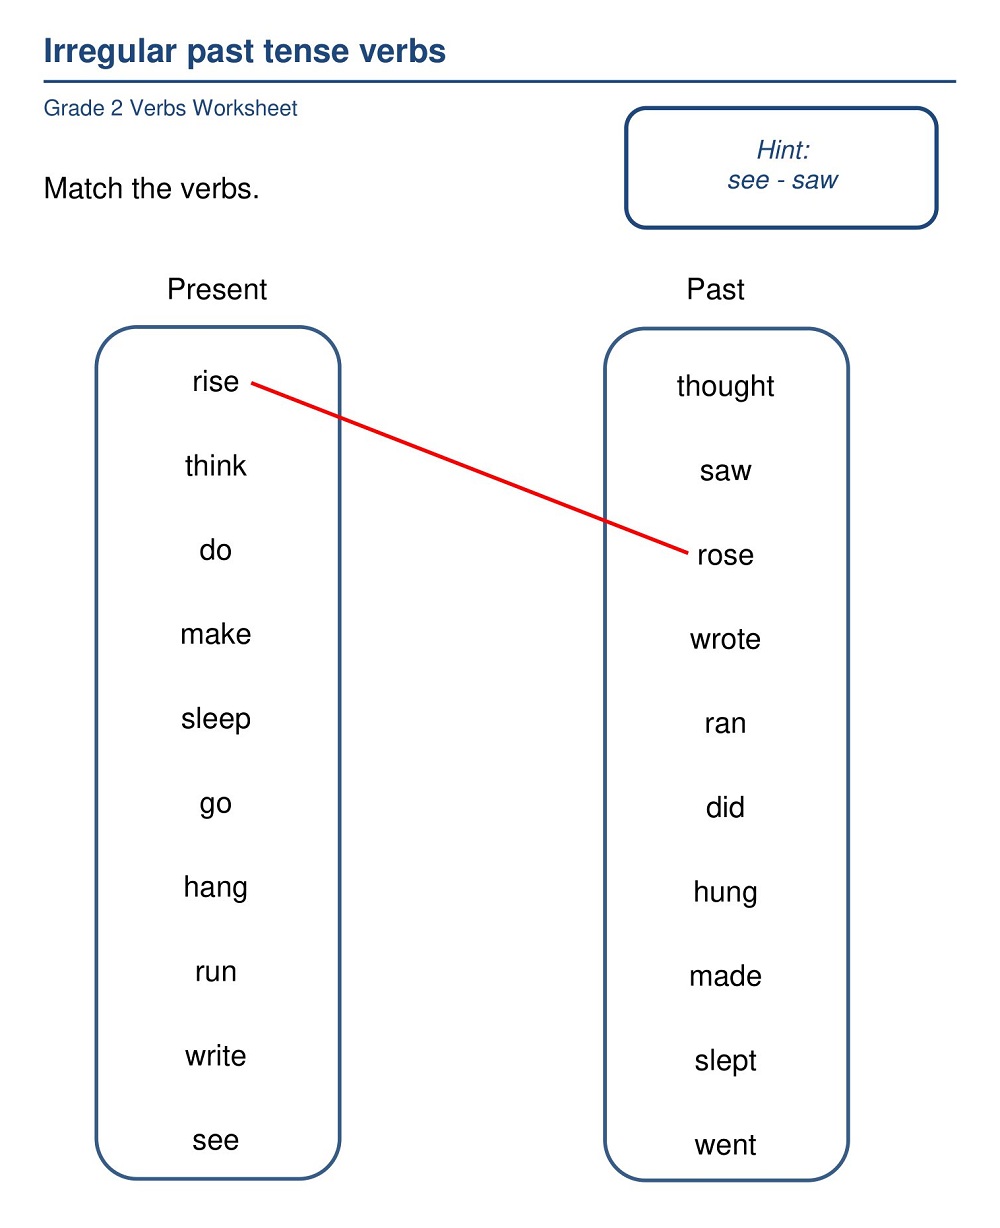 Grade 2 Past Tense Irregular Verbs Worksheet